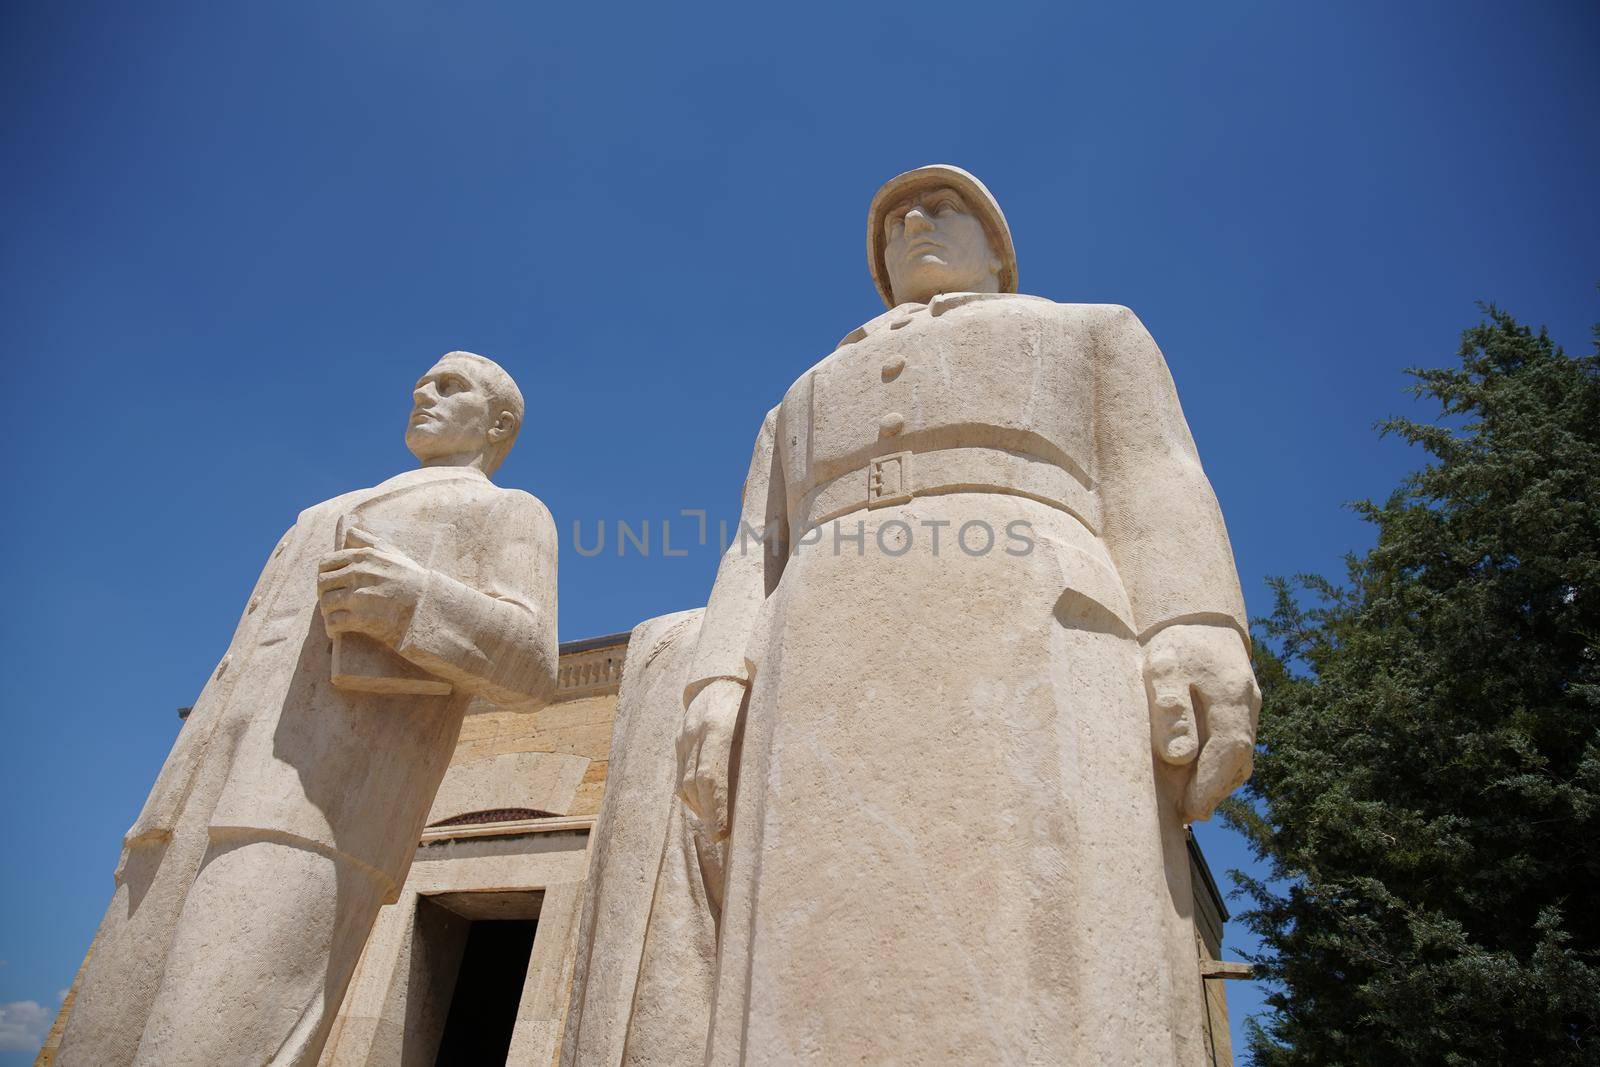 Turkish Men sculpture located at the entrance of the Road of Lions in Anitkabir, Ankara, Turkiye by EvrenKalinbacak